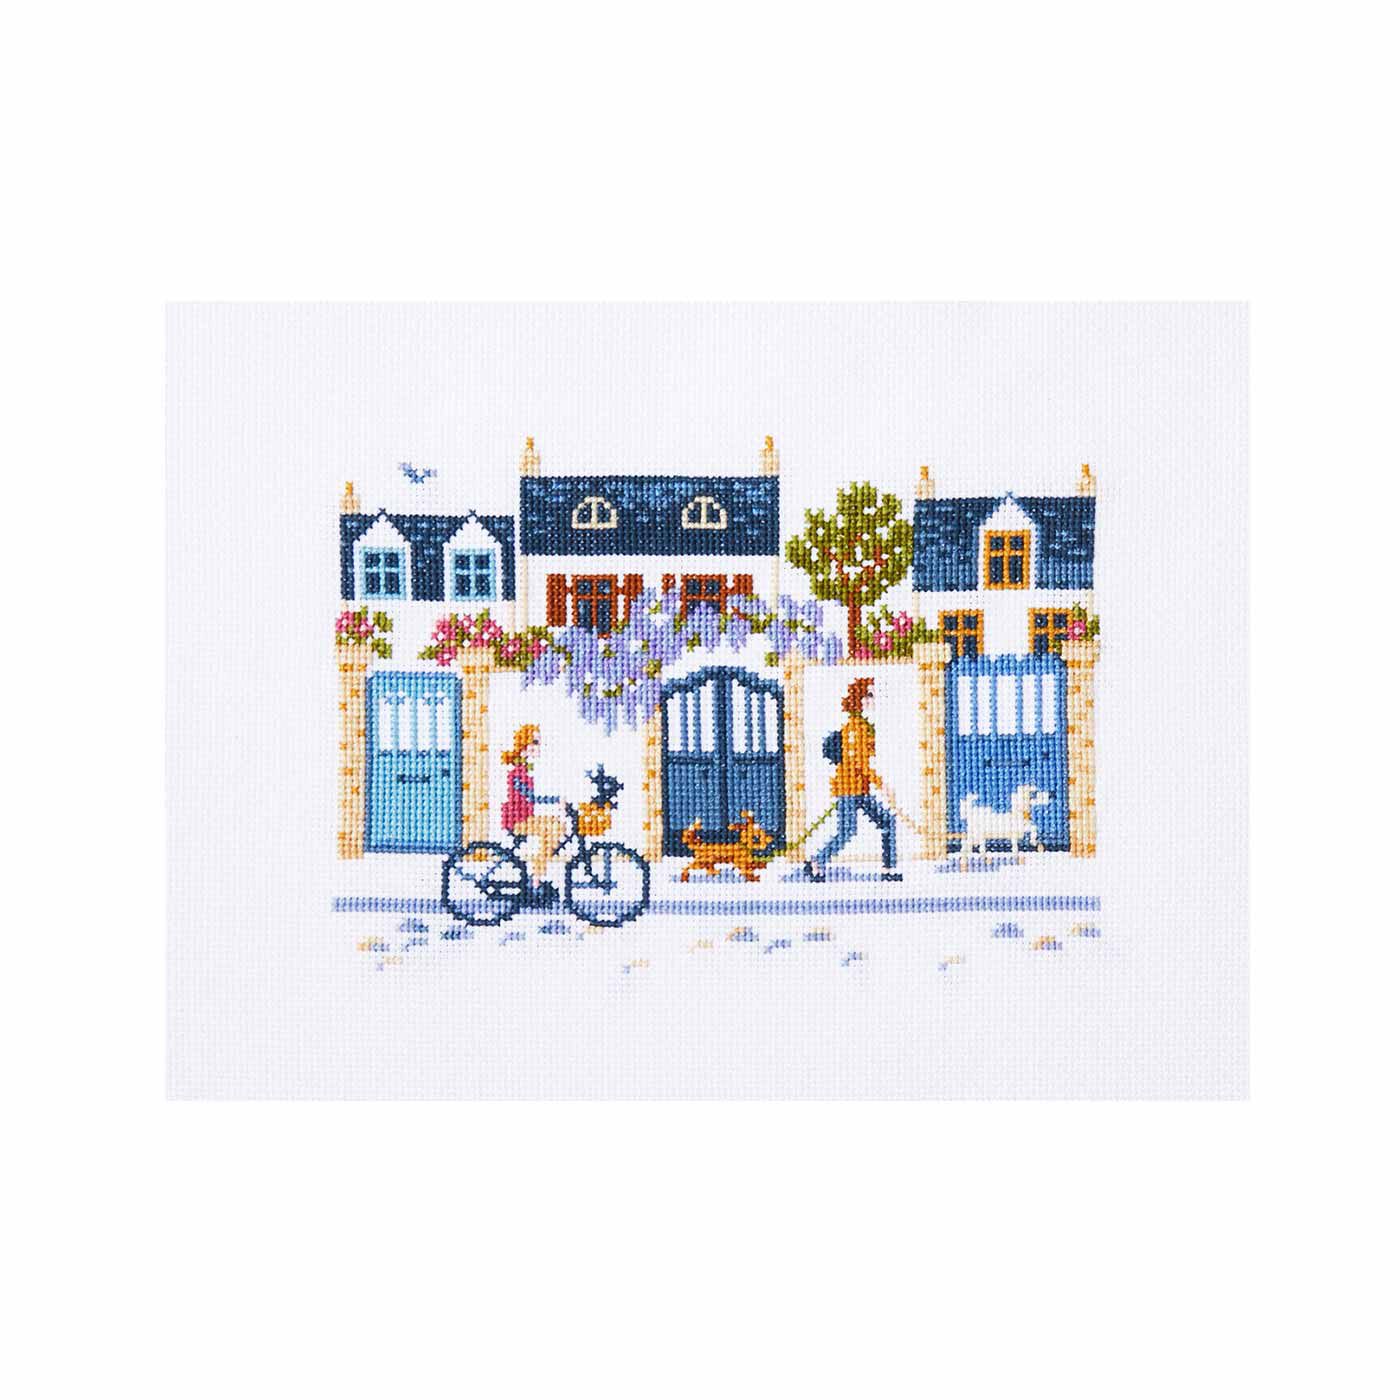 Couturier|アンヌさんが描くフランスの暮らしと四季の風景クロスステッチの会|La Promenade:散歩